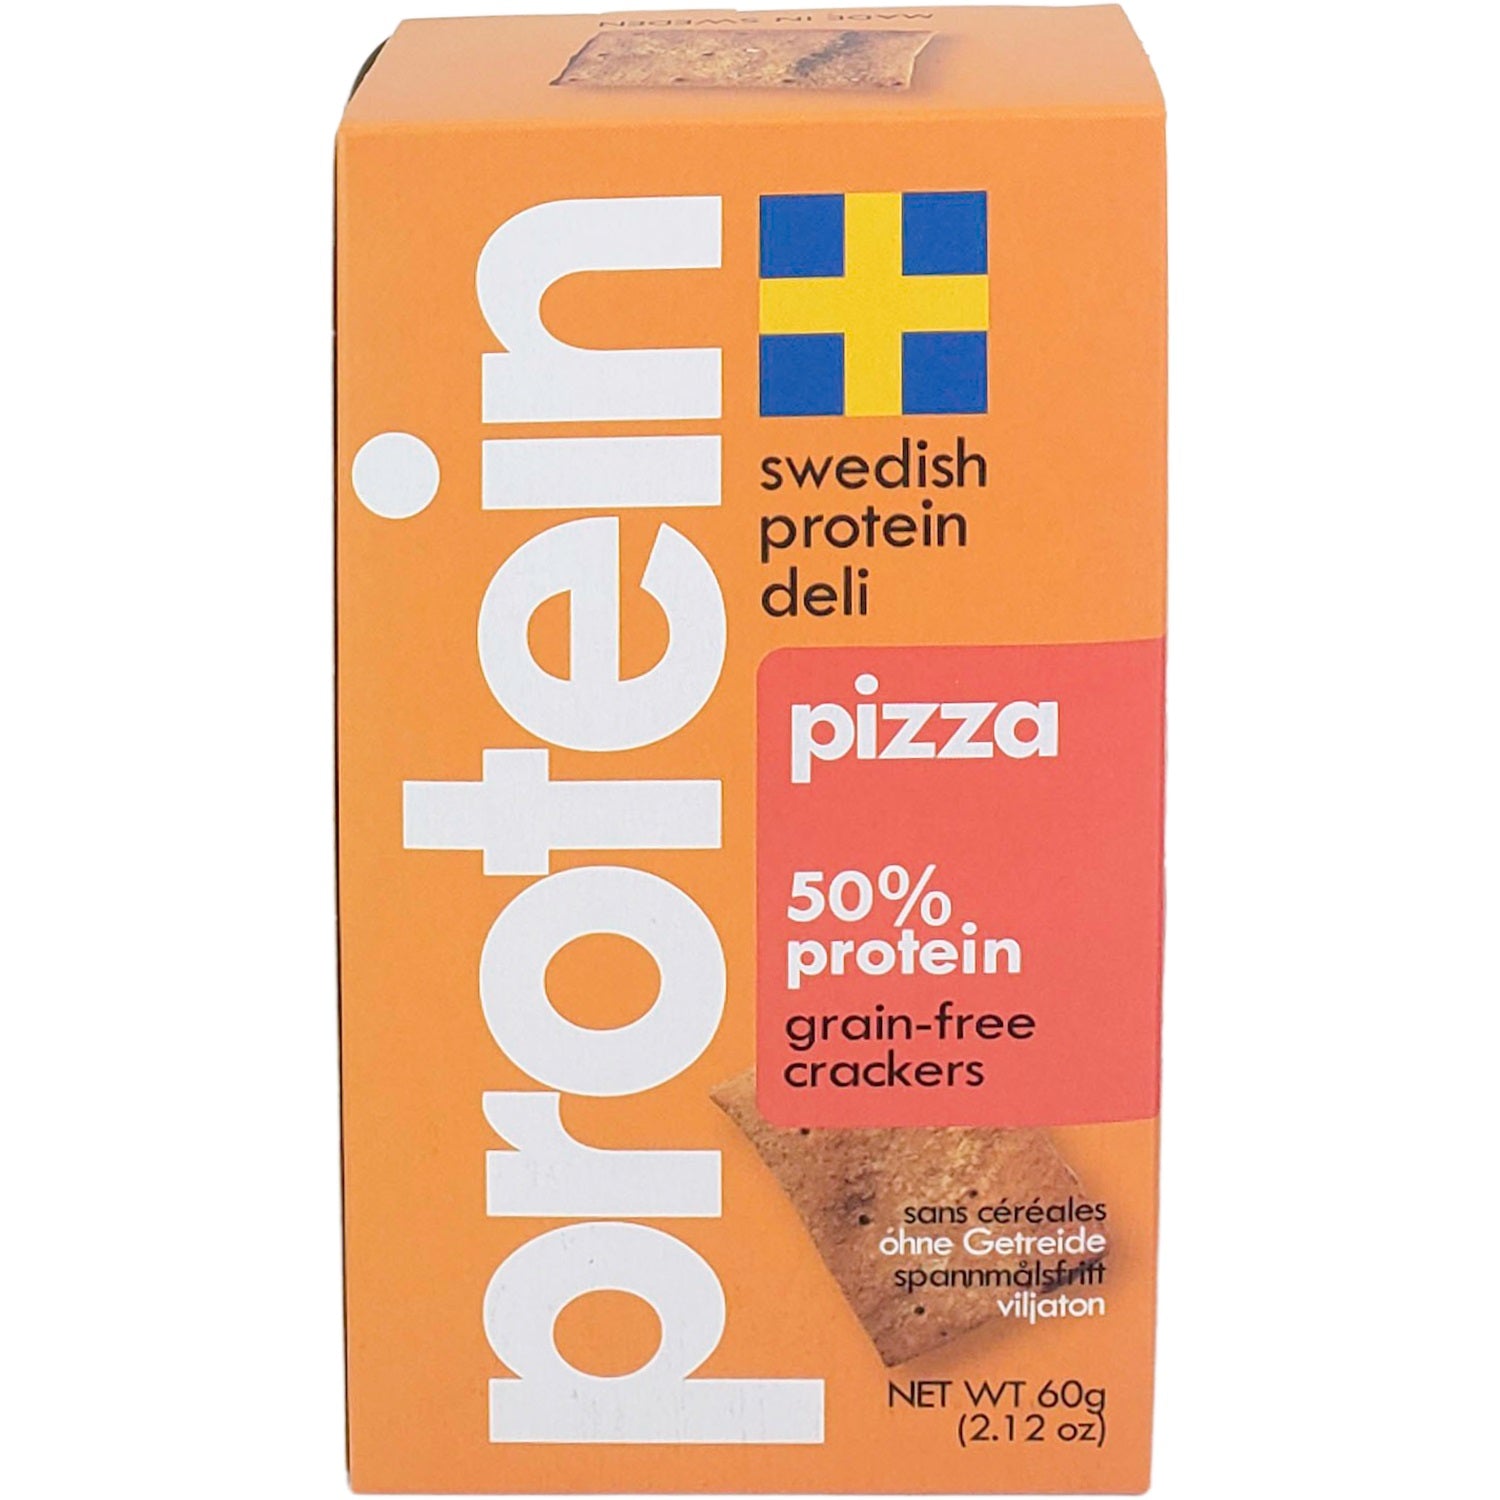 Swedish Protein Deli Crackers